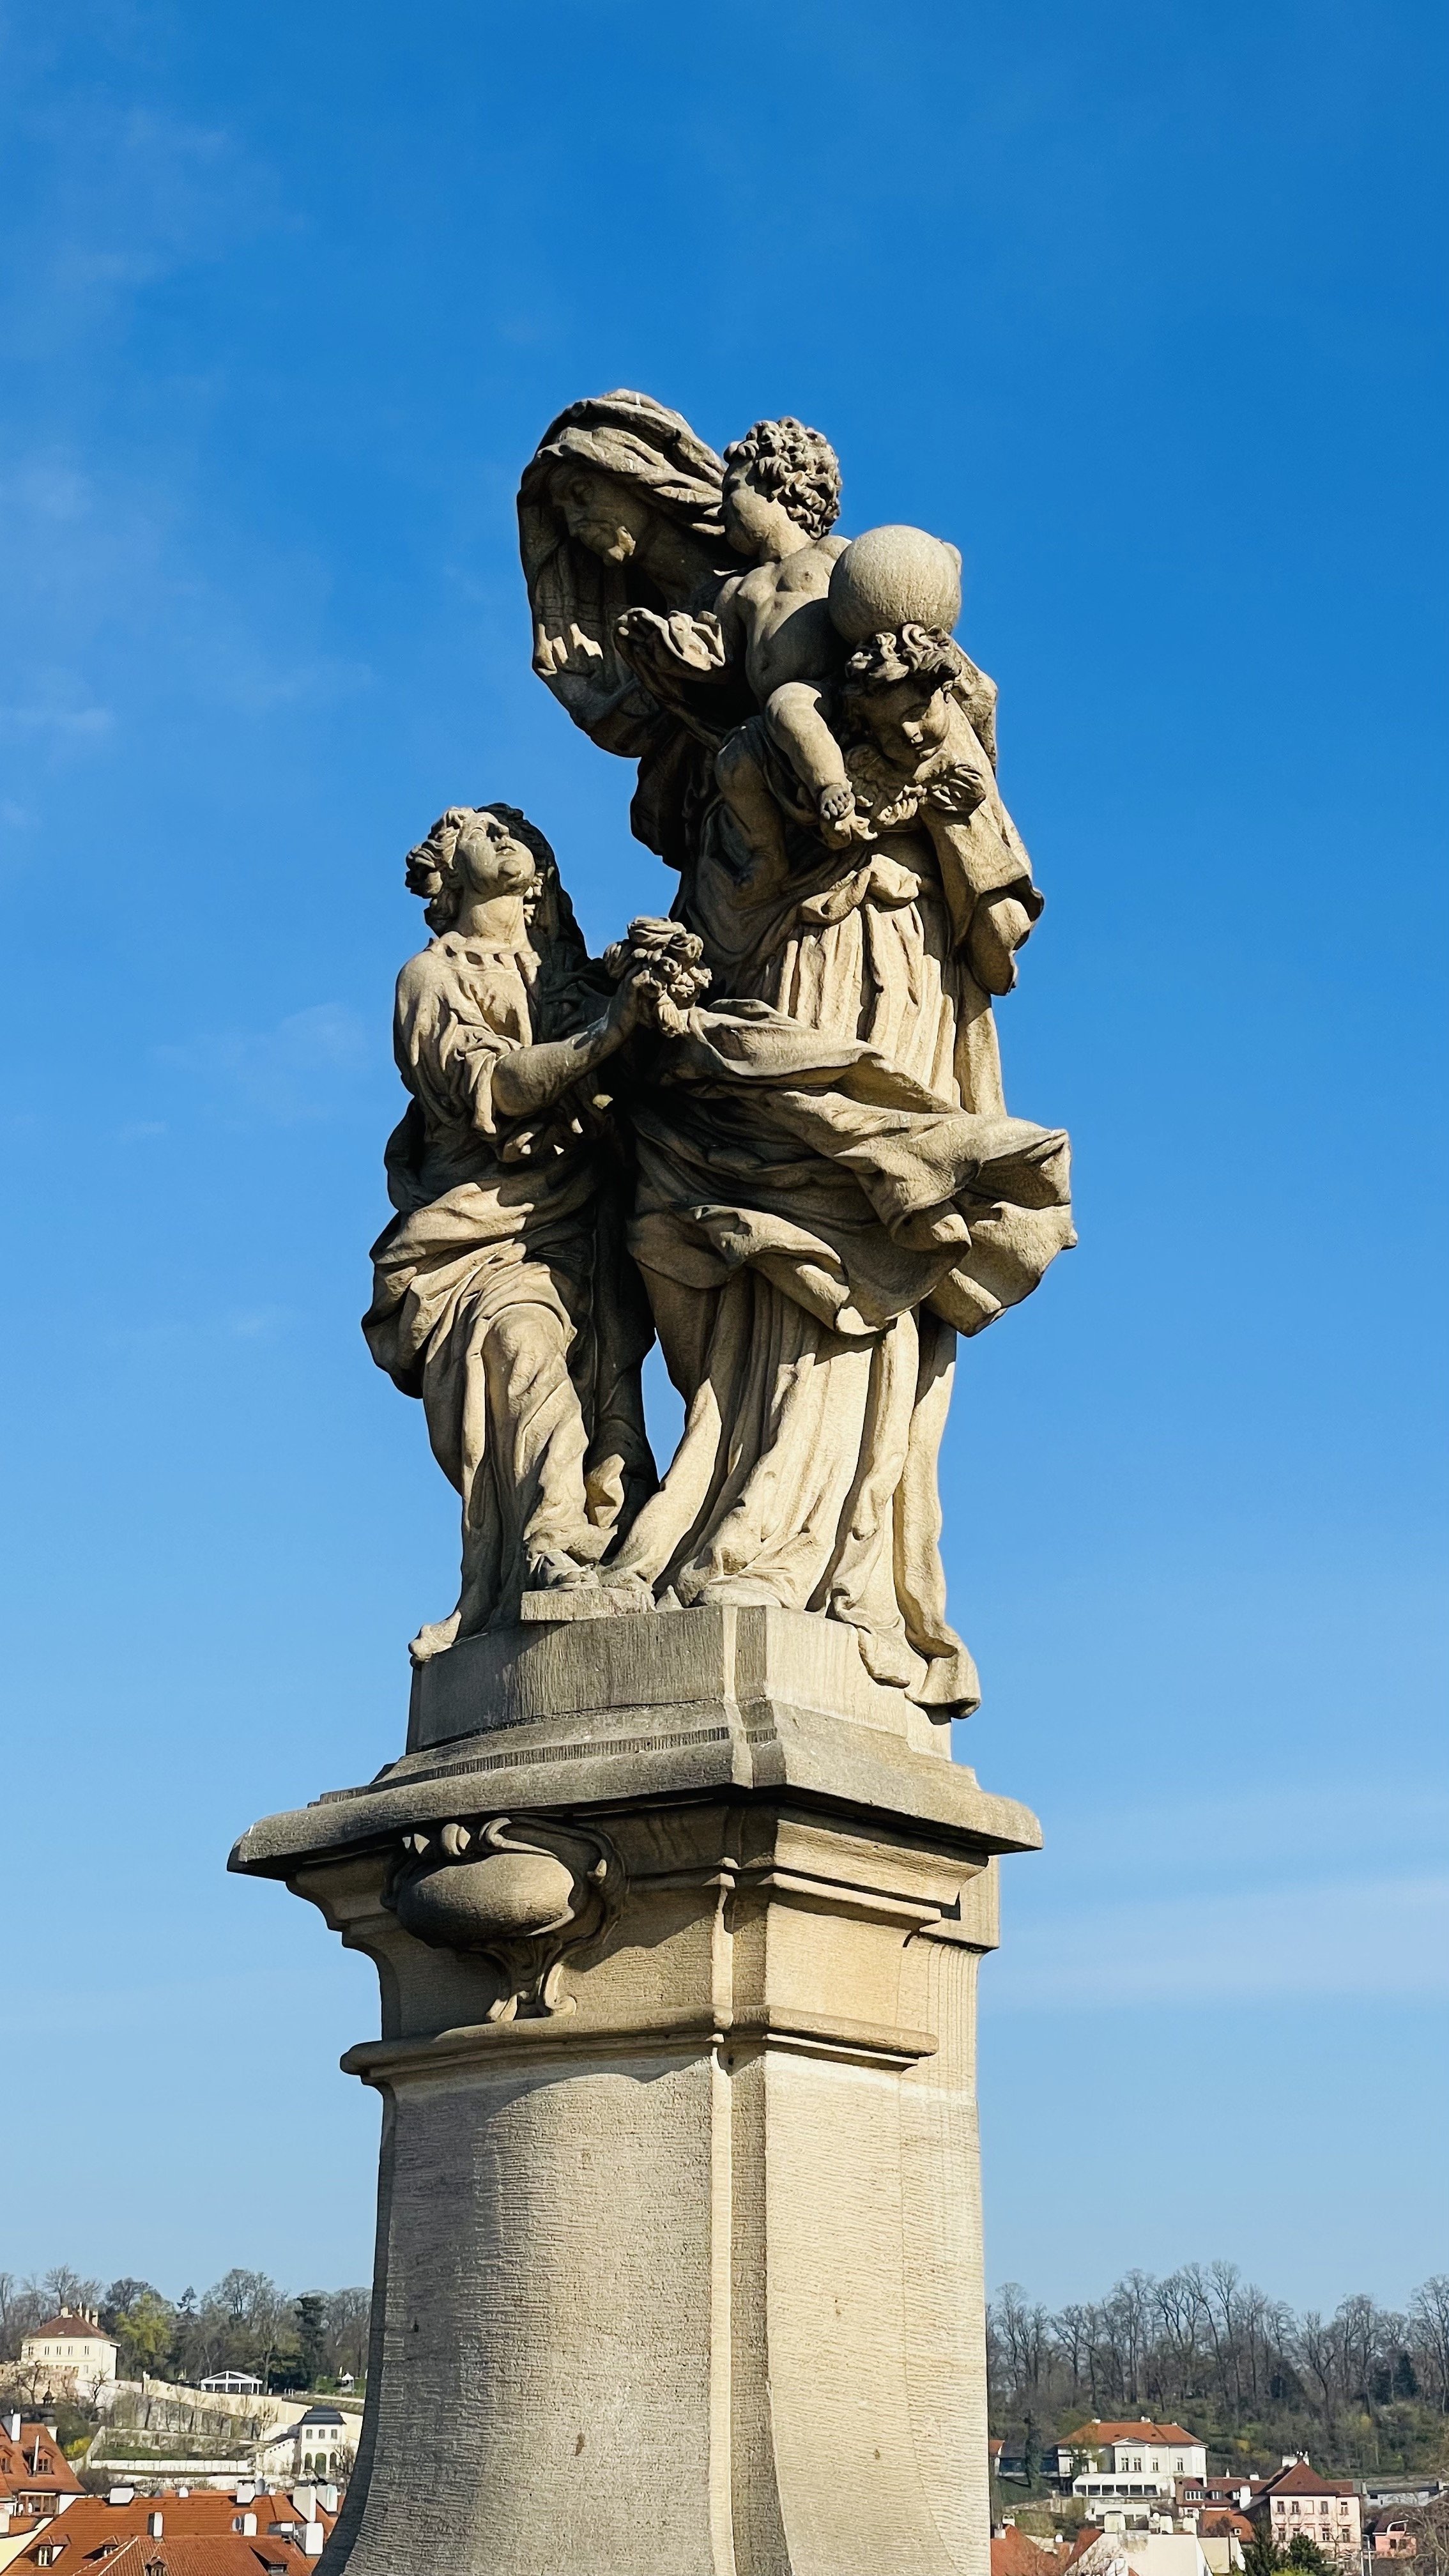 Statue of St. Anne in Charles Bridge